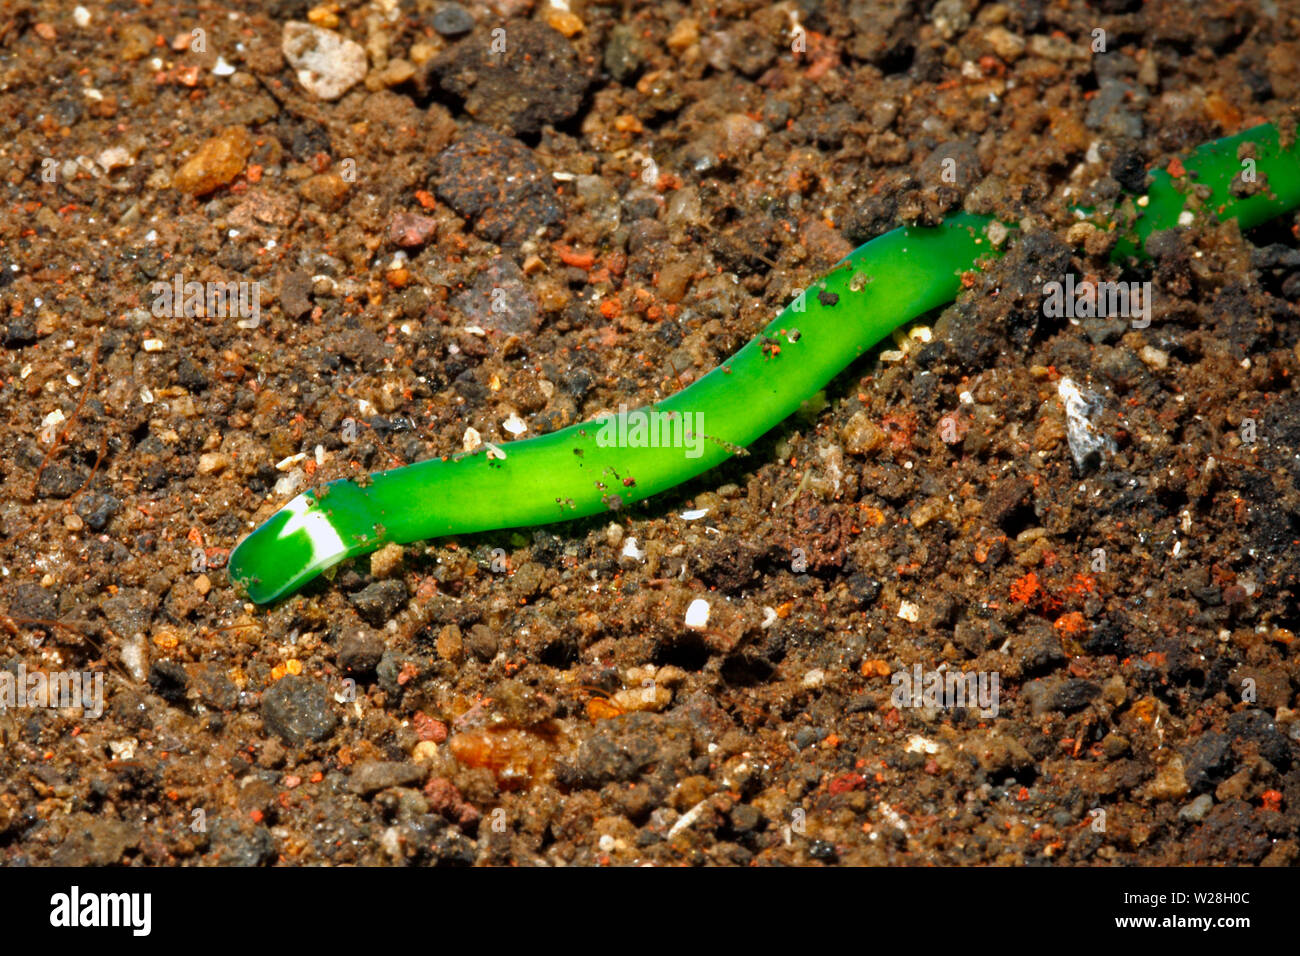 Green Ribbon Worm, Notospermus sp. Tulamben, Bali, Indonesia. Bali Sea, Indian Ocean Stock Photo